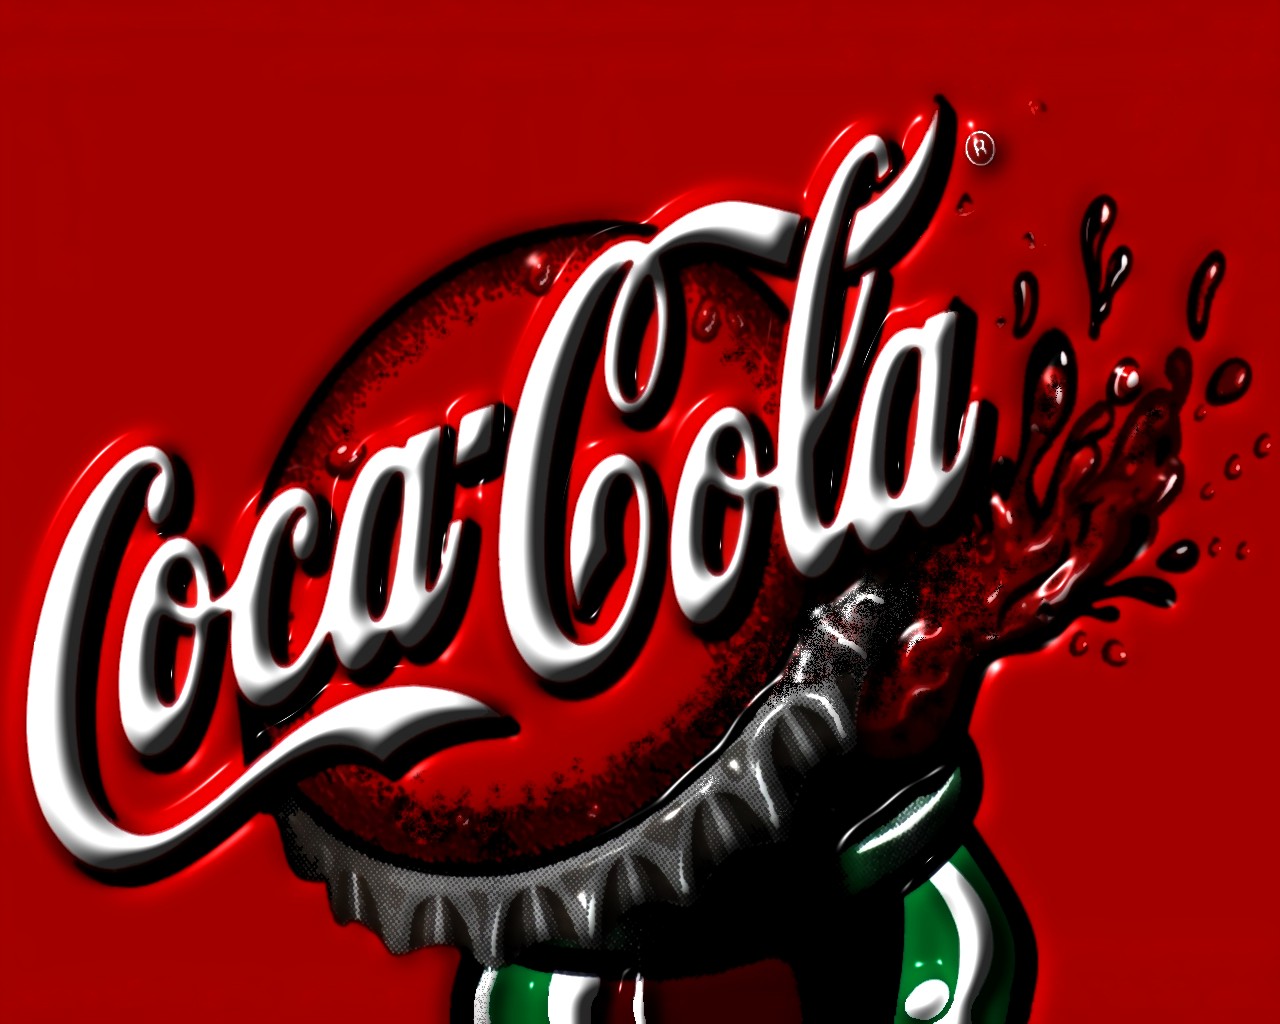 Coca_Cola_02_1280x1024.jpg